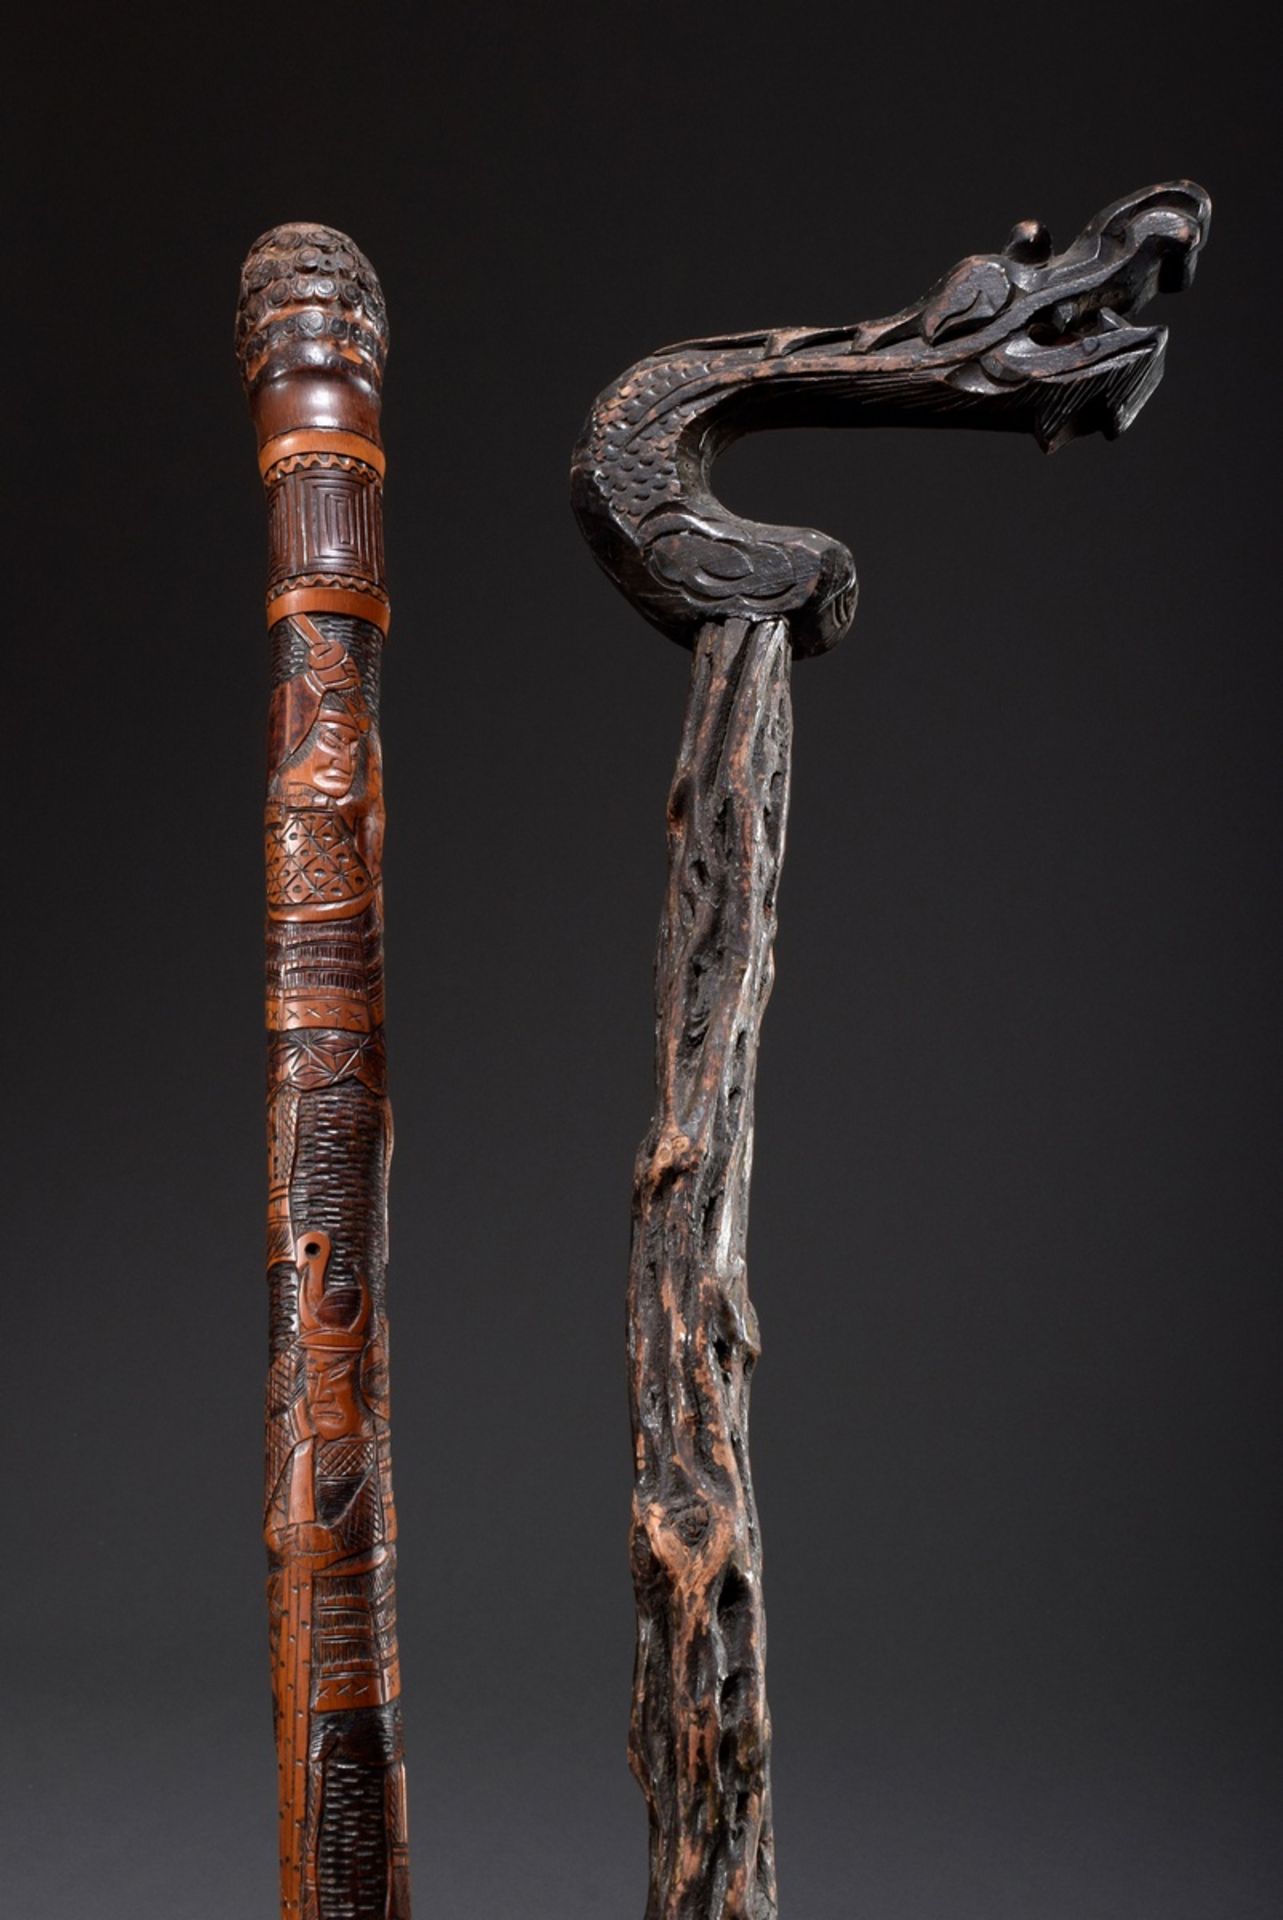 2 Diverse Gehstöcke: Knotenstock eines Daoisten | 2 various walking sticks: Knotted cane of a Daoi